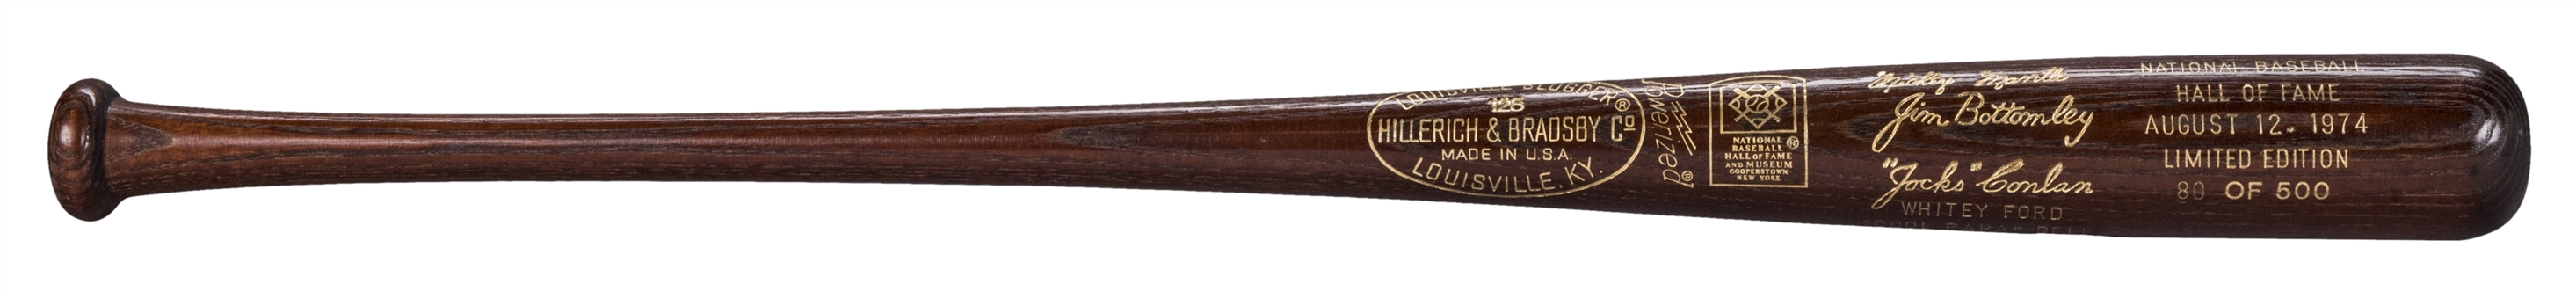 National Baseball Hall of Fame Commemorative Bat for 1974 Induction (LE 80/500)